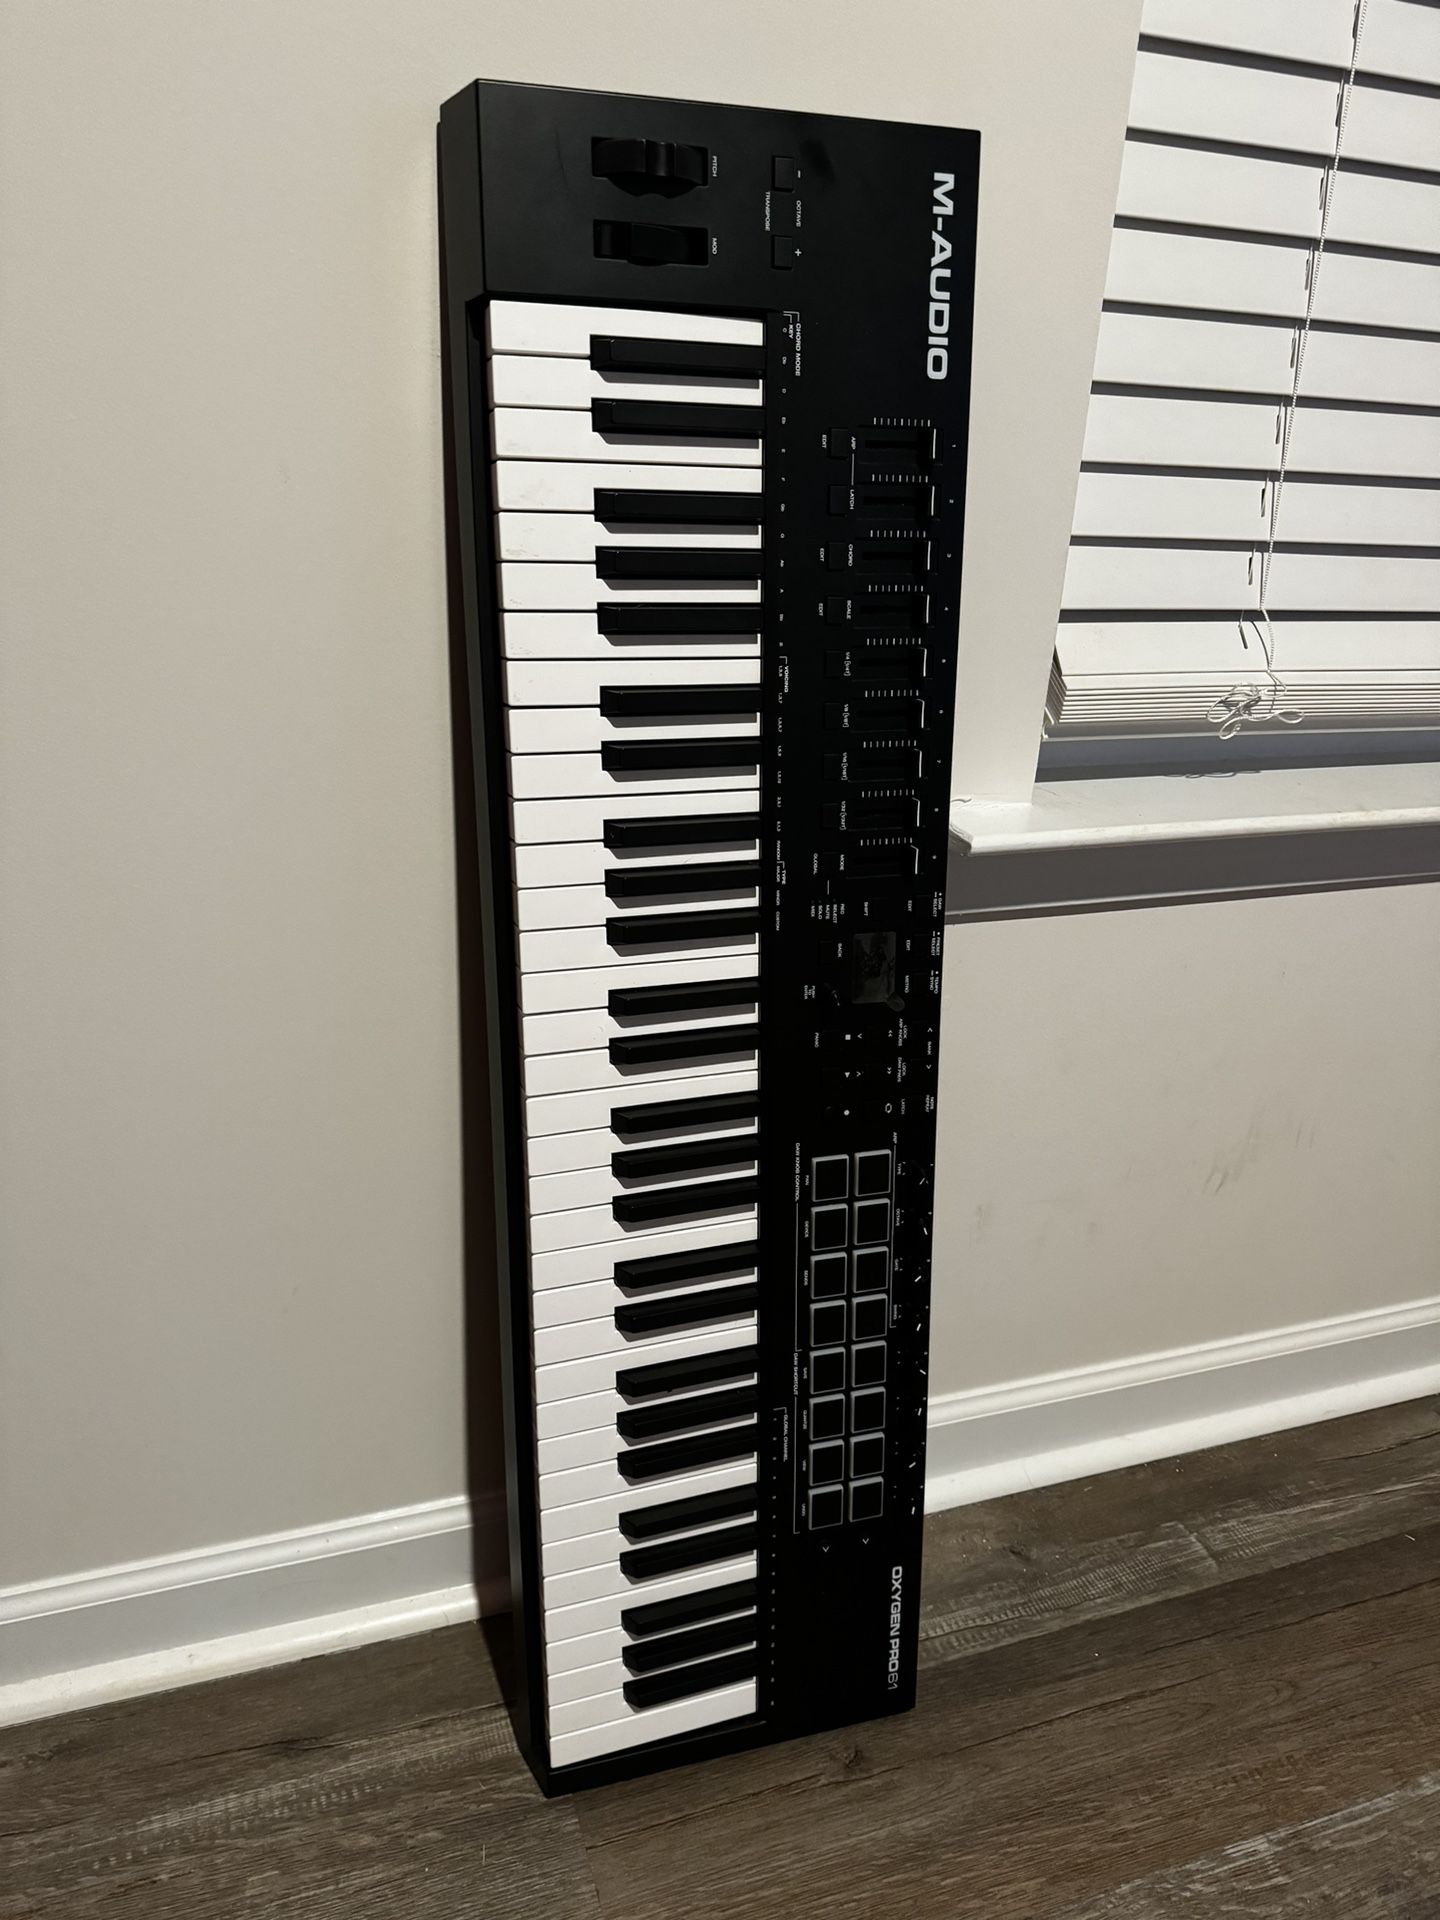 Midi Keyboard 